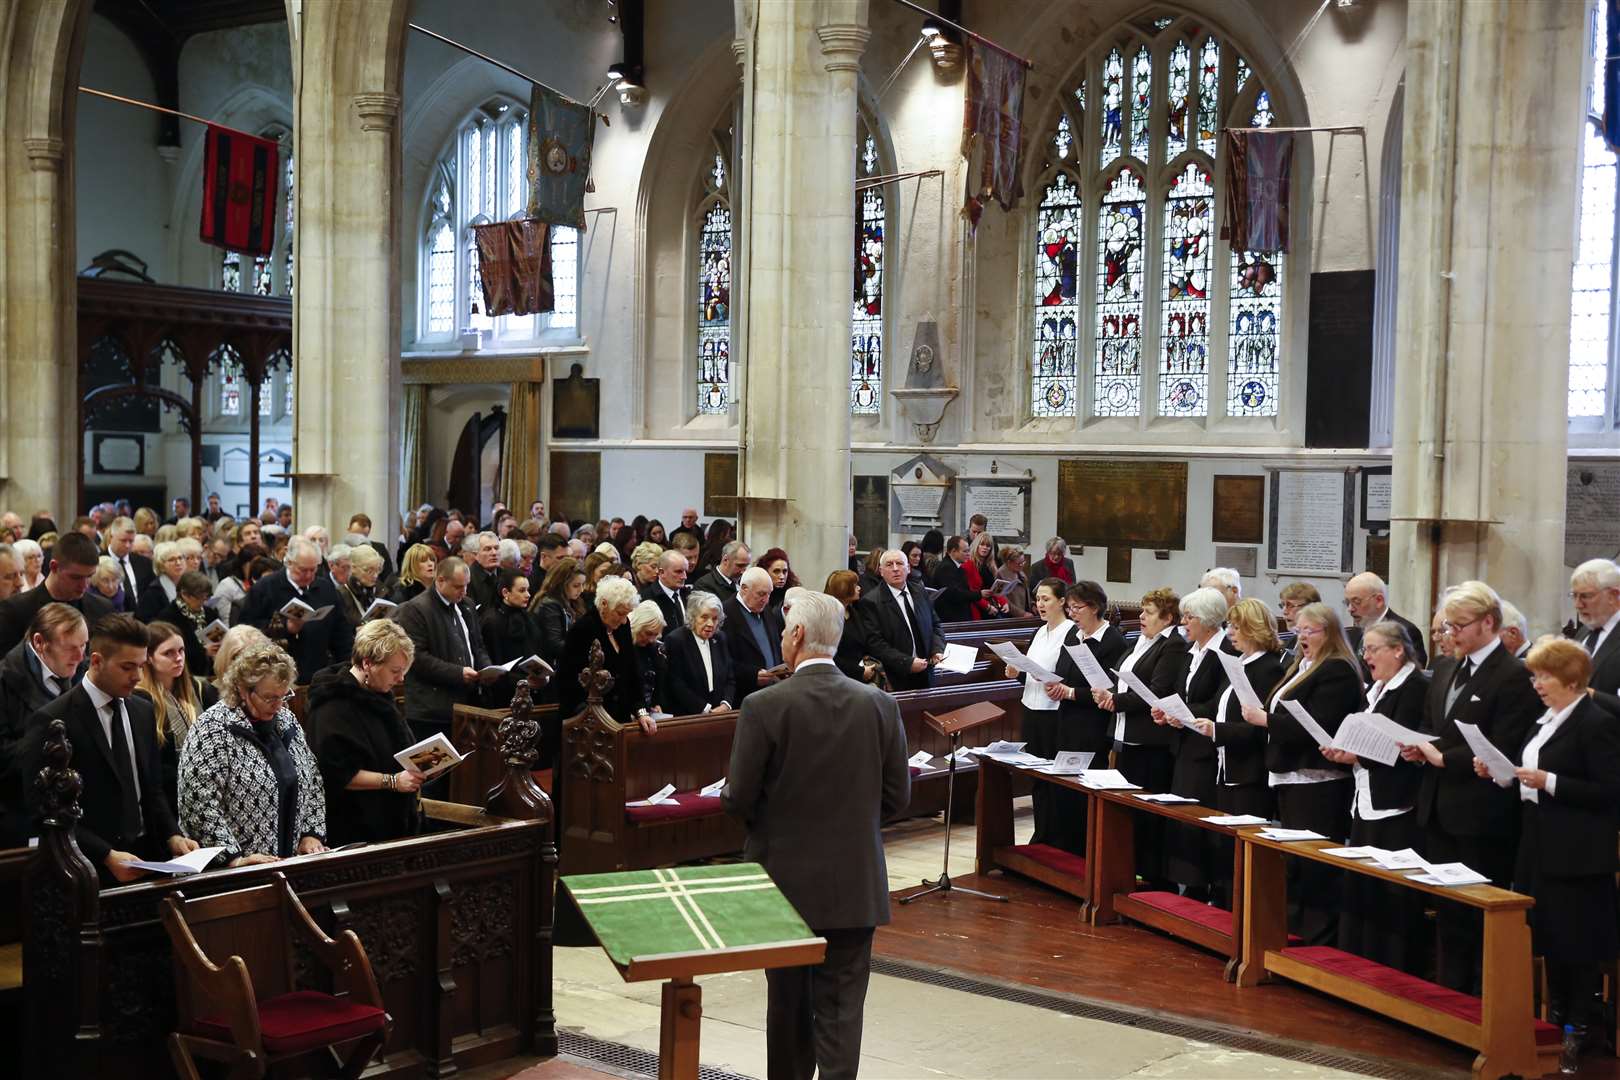 The memorial service, at All Saints Church